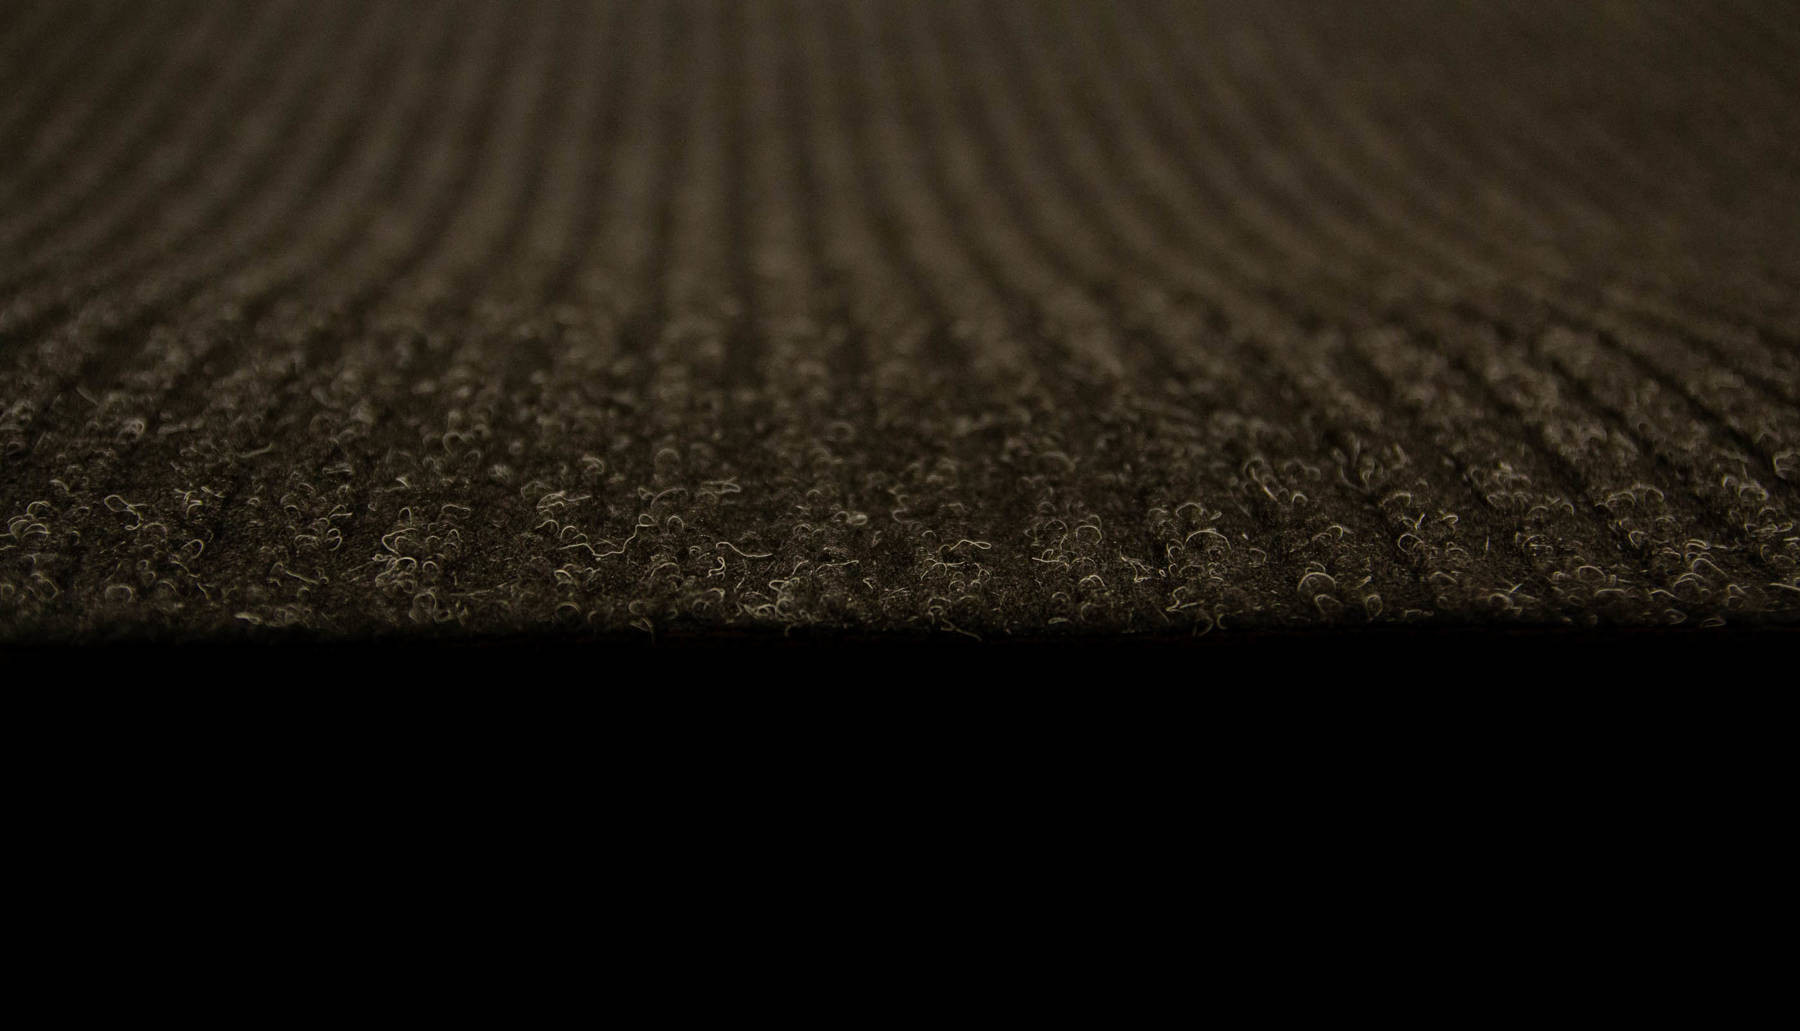 Metrážny koberec Duo 79 čierny 